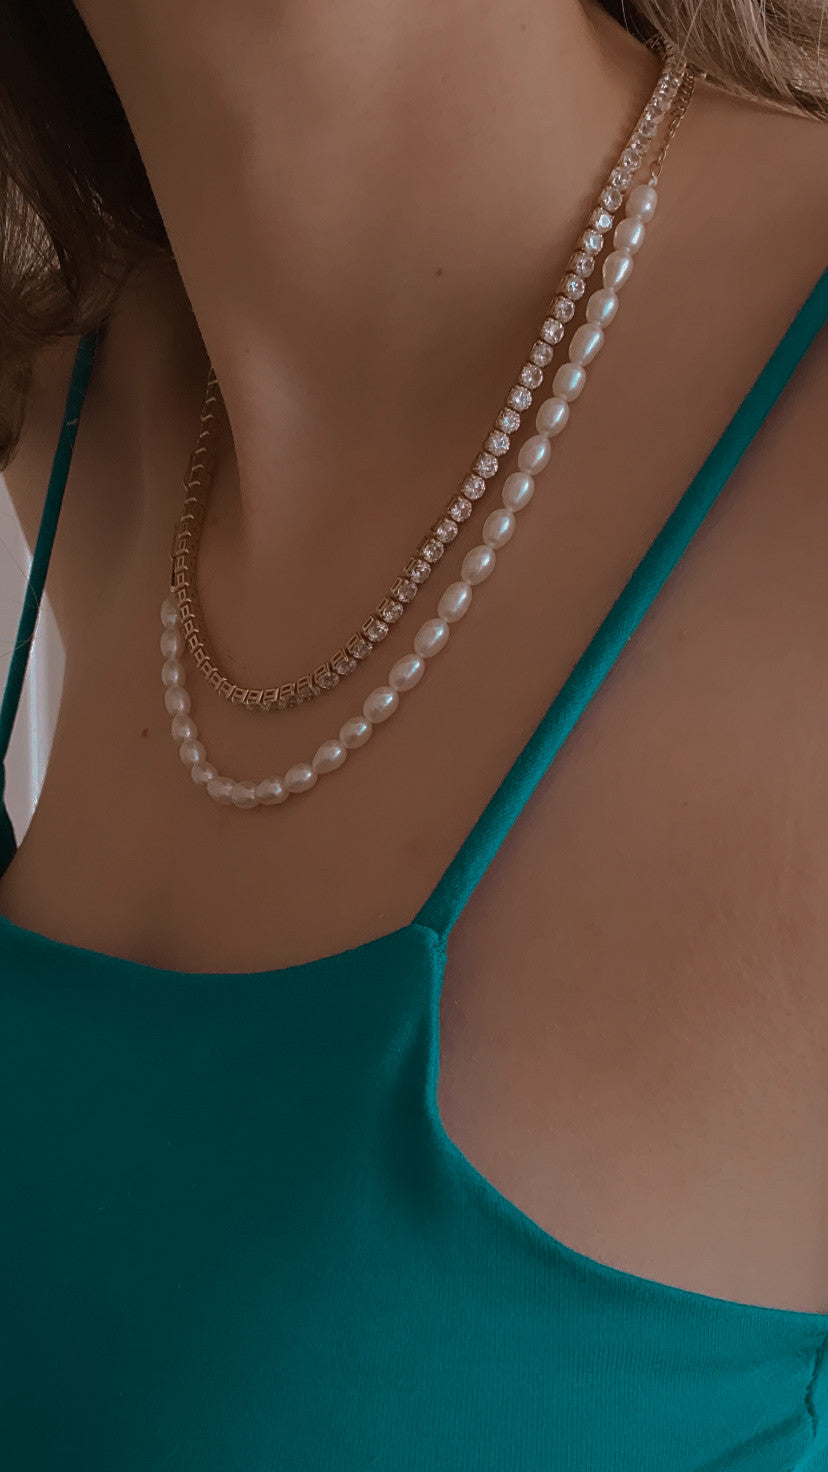 Tennis Necklace ∙ Necklaces For Women ∙ Diamond Tennis ∙ Crystal row necklace ∙ Cubic Zirconia Necklace